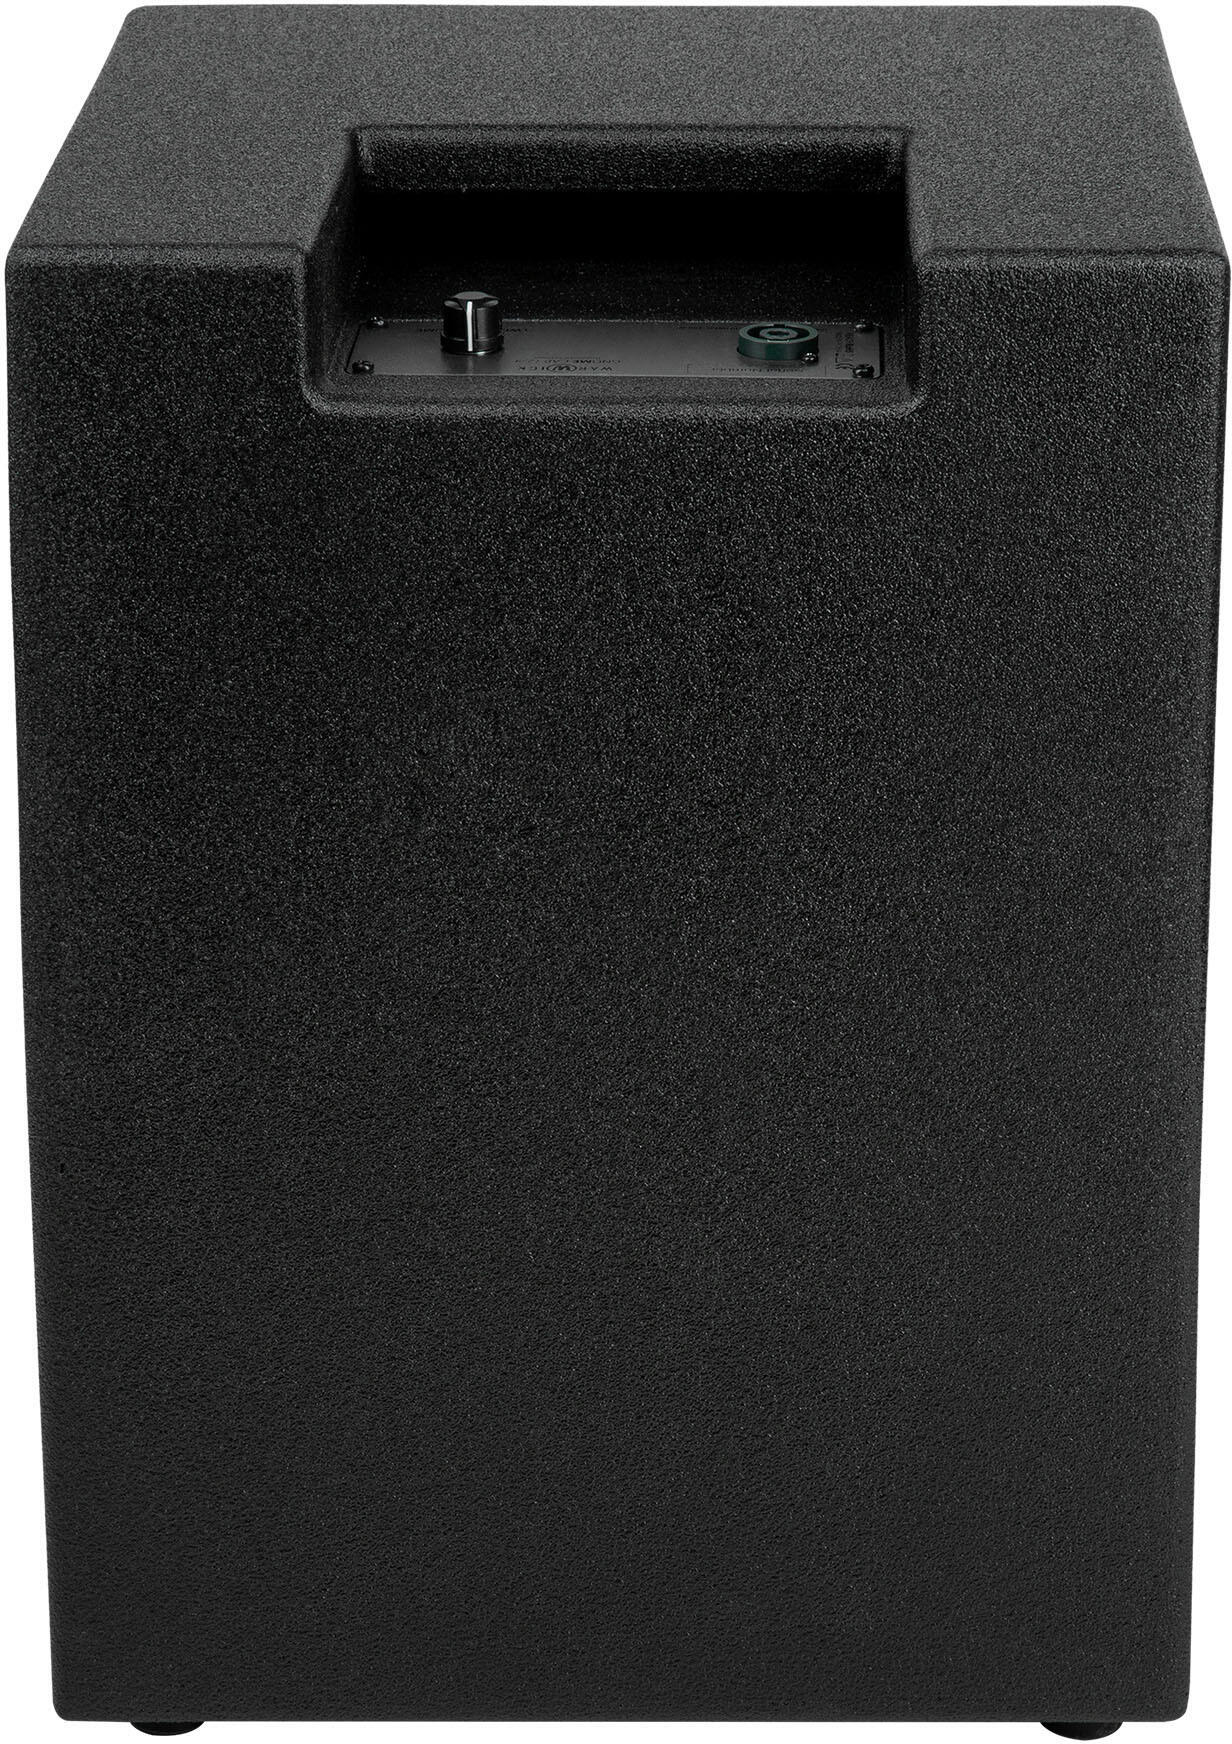 Warwick Gnome Pro Cab 12/4 Bass Cab 1x12 300w 4-ohms - Bass Boxen - Variation 1